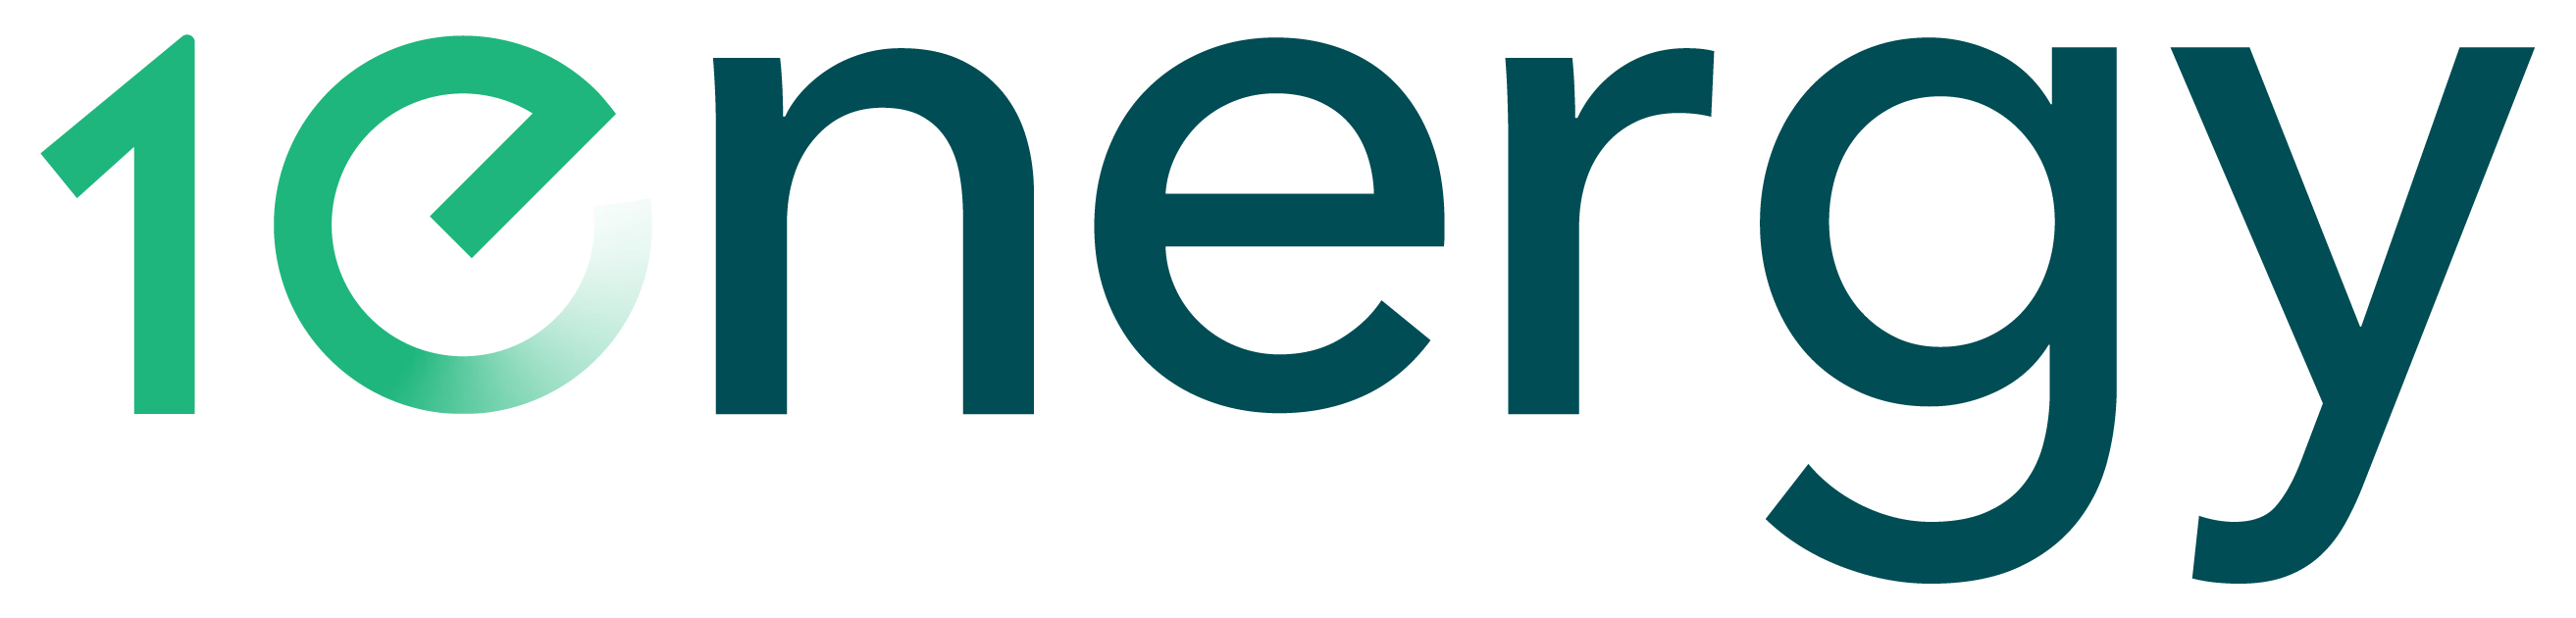 1Energy Group Limited logo